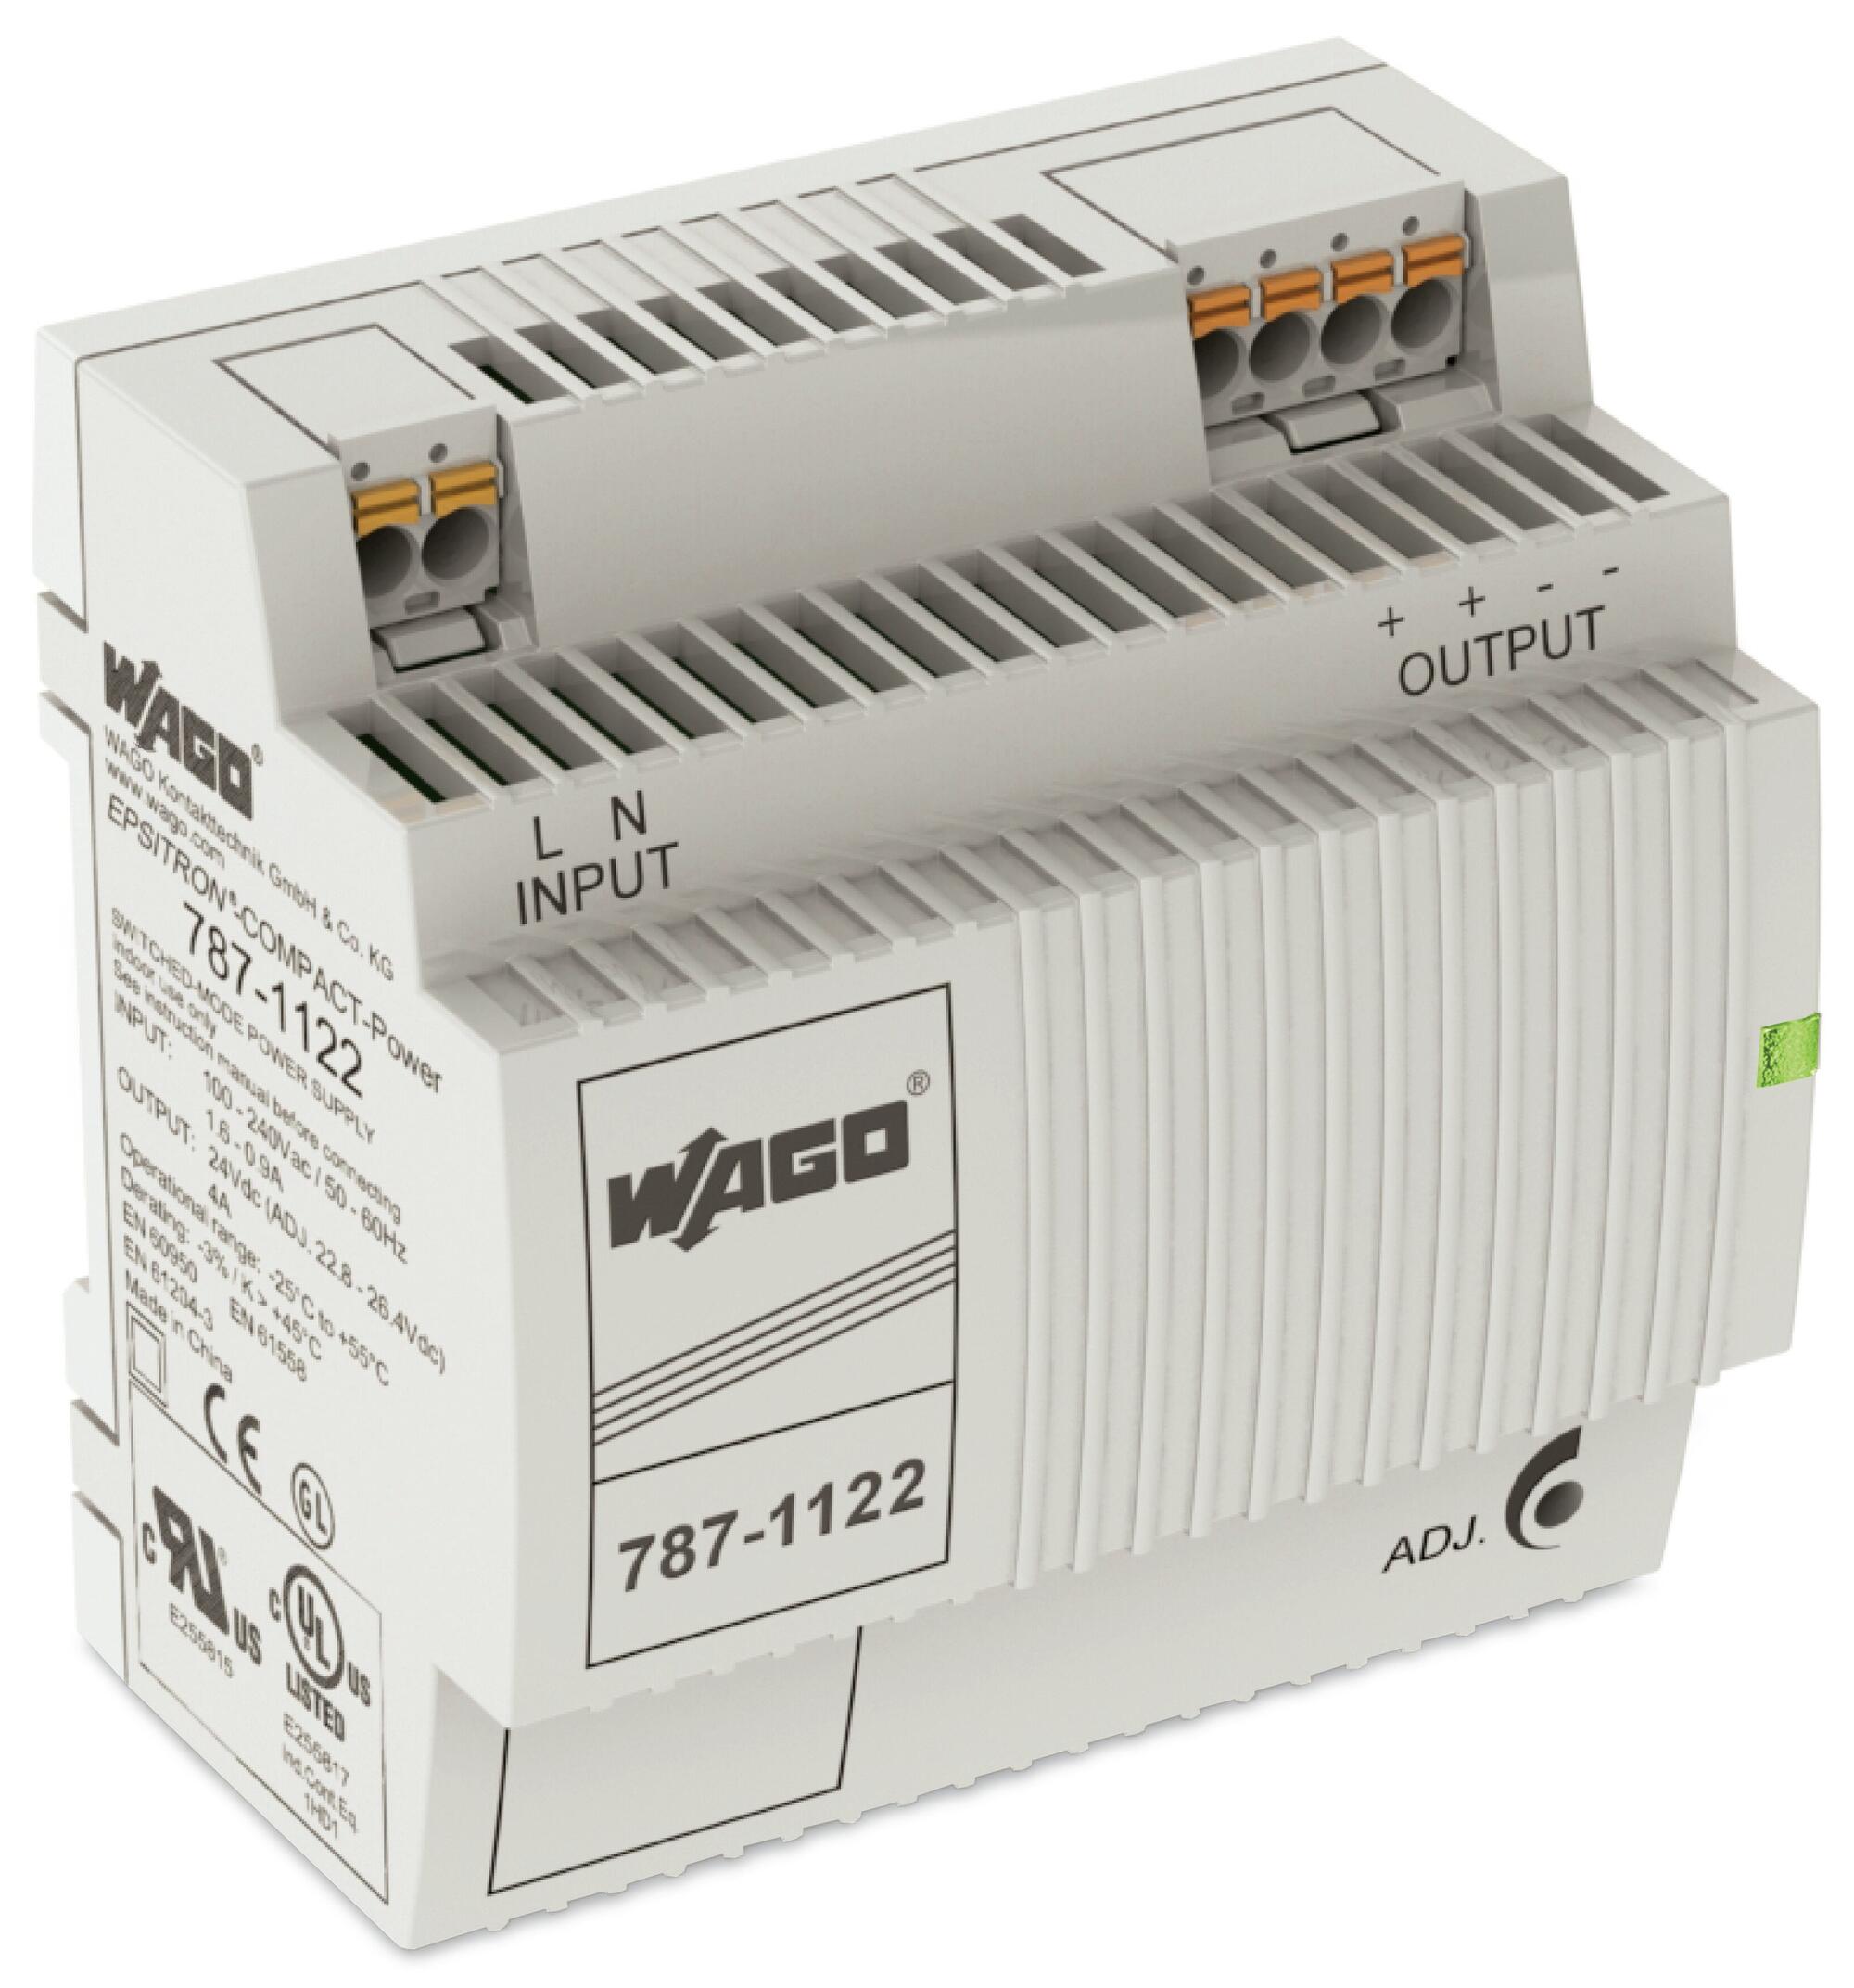 Switched-mode power supply; Kompakt; 1-phase; 24 VDC utgangsspenning; 4 A utgangsstrøm; DC-OK LED